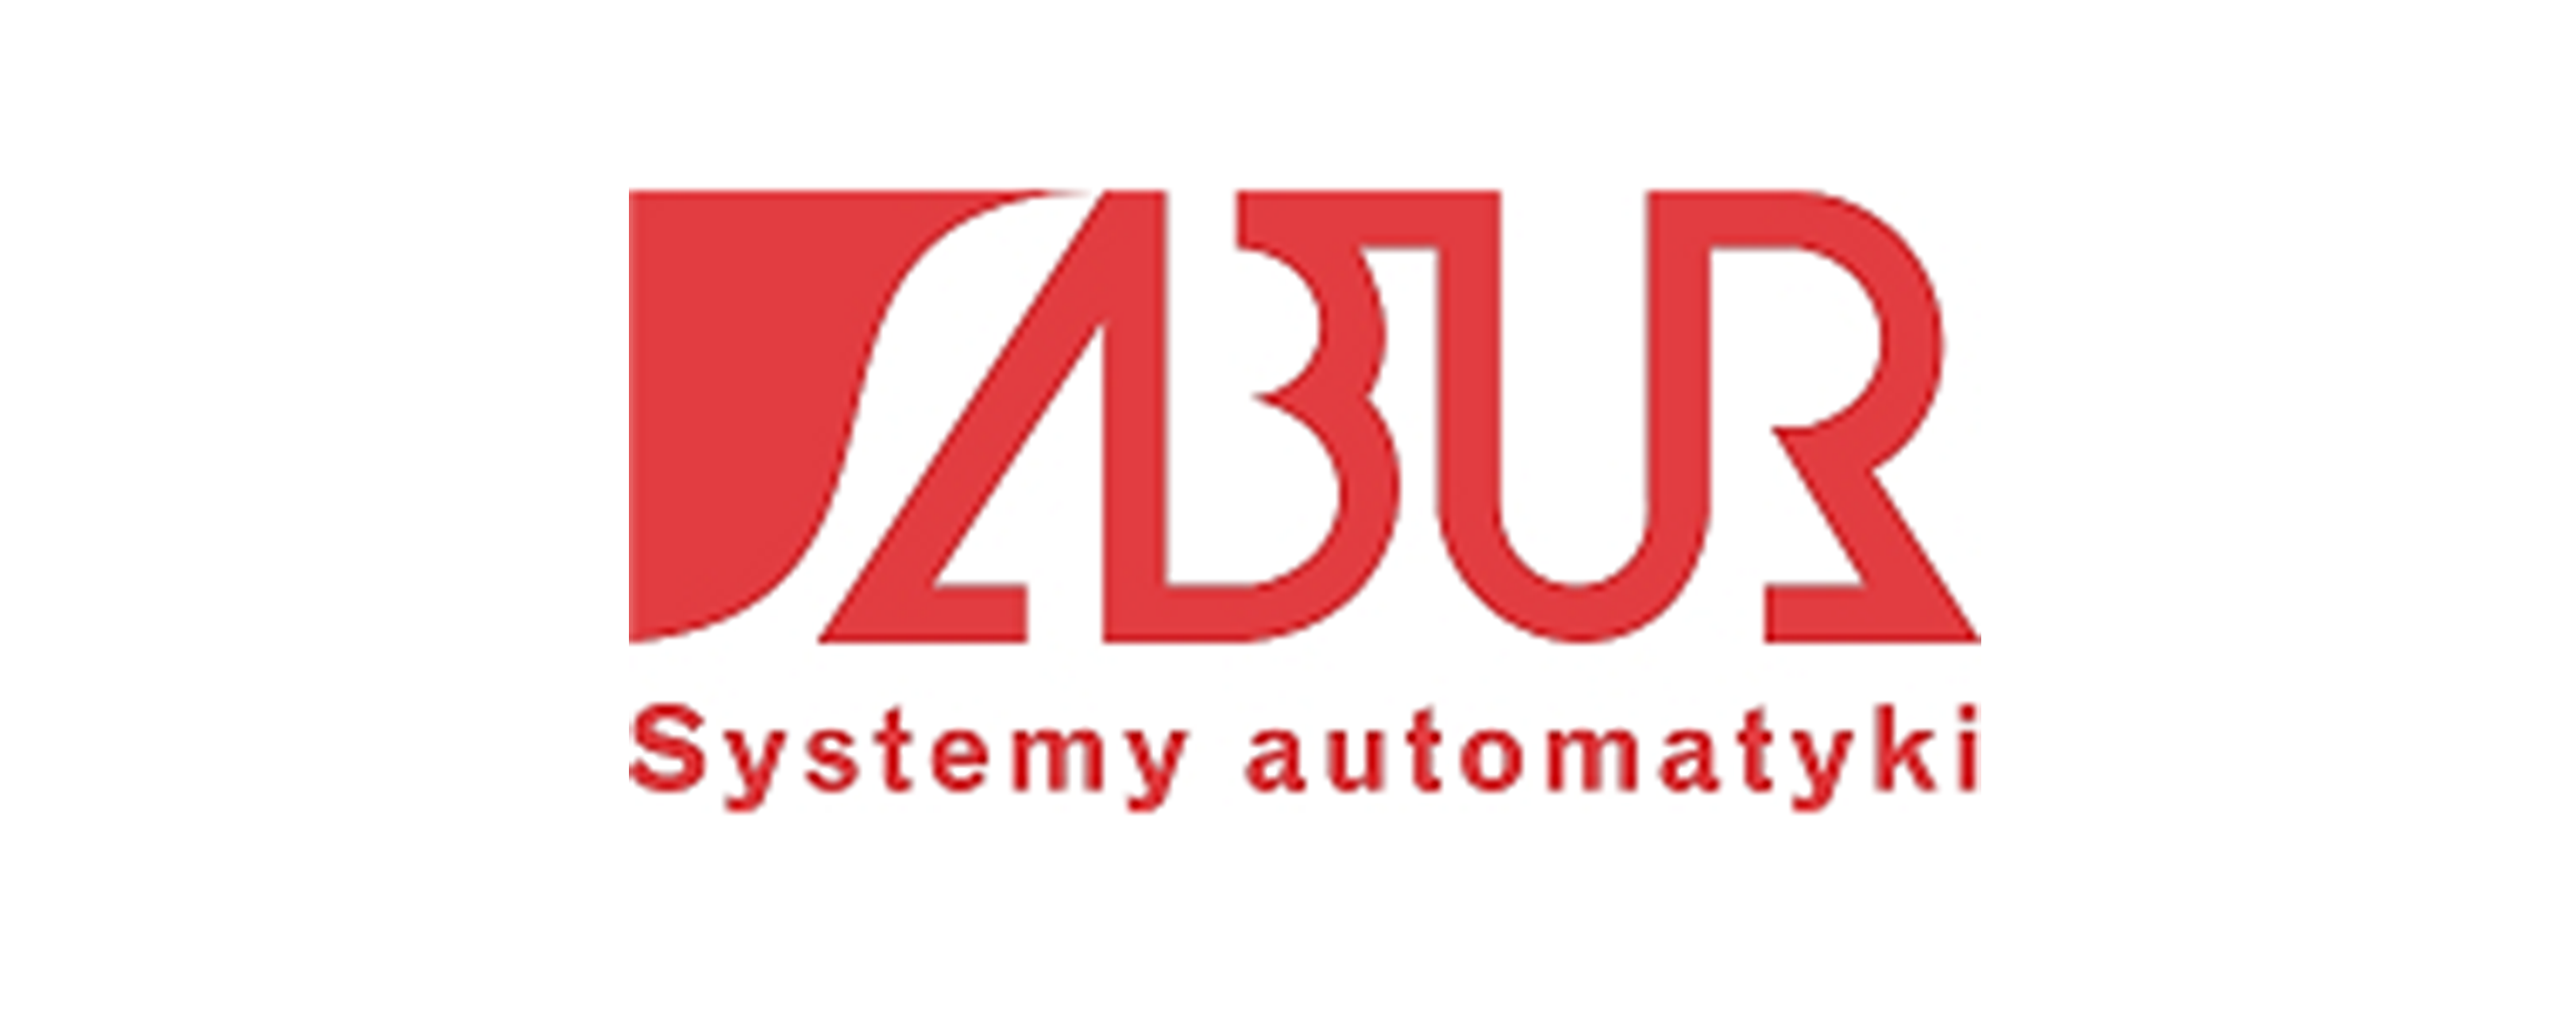 SABUR_system automatyk